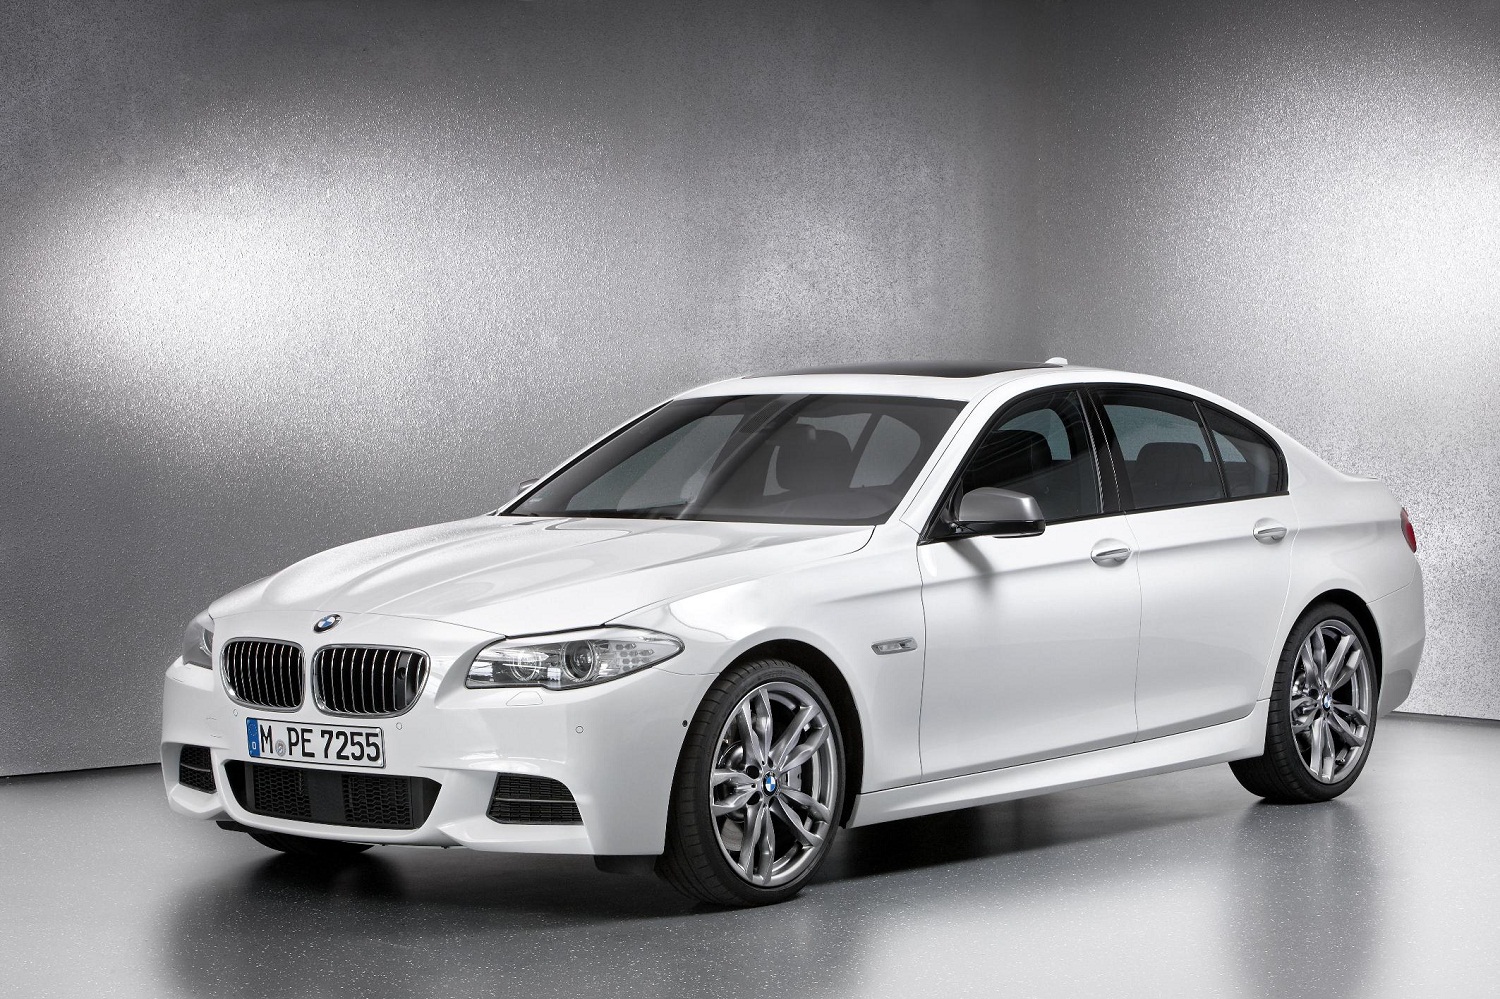 Mua bán xe BMW 520i 2015  1 tỉ 050 triệu  XC00002428